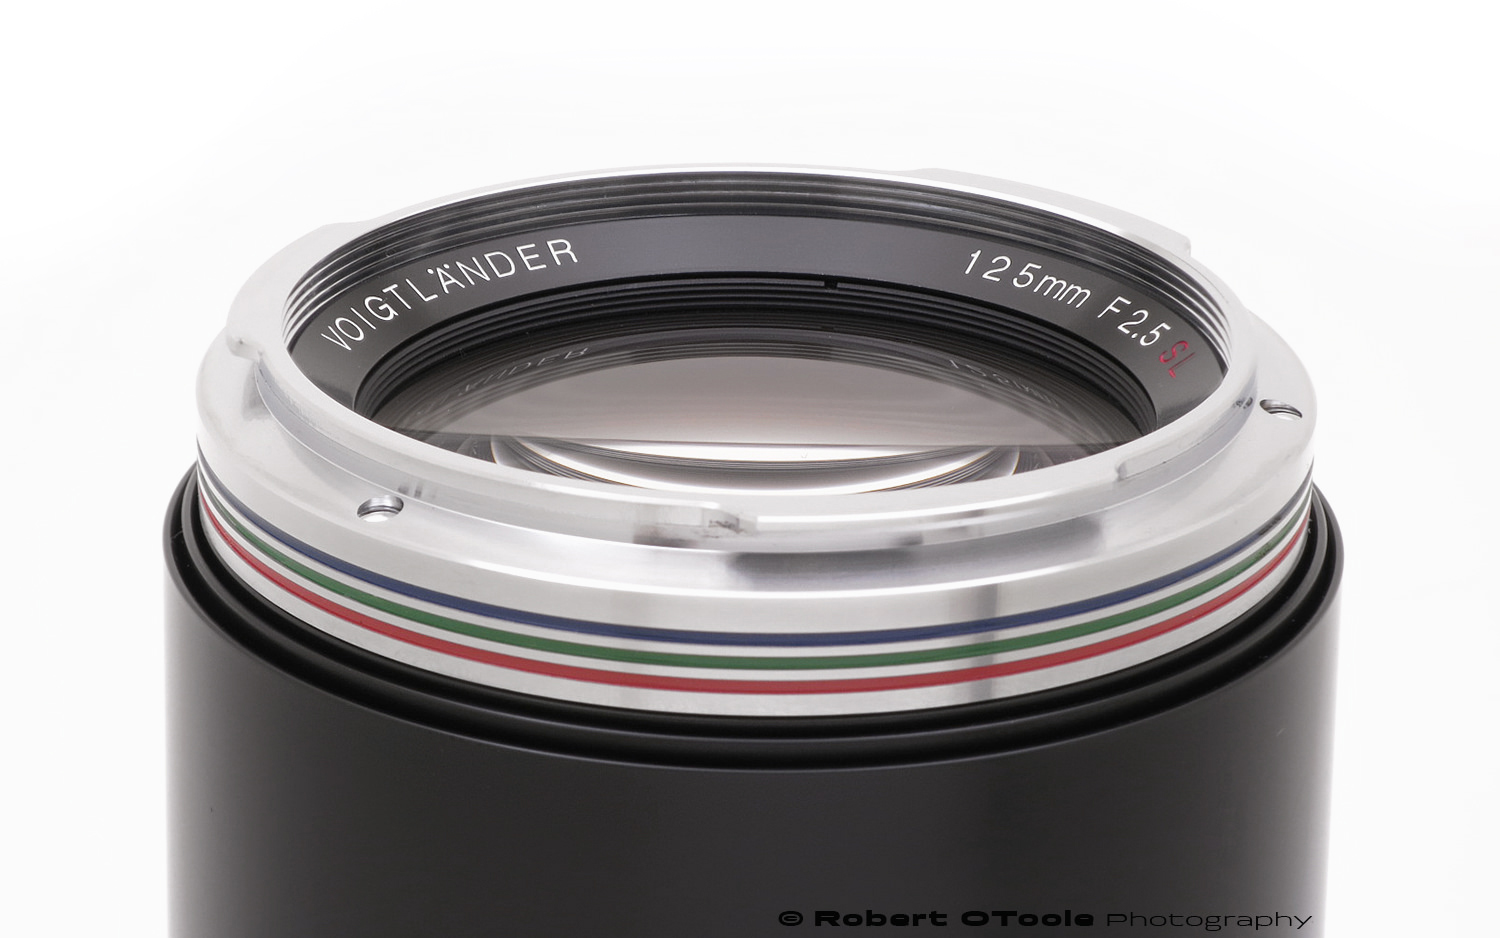 Voigtlander SL 125mm f/2.5 Macro APO Lanthar Lens Test Review ...